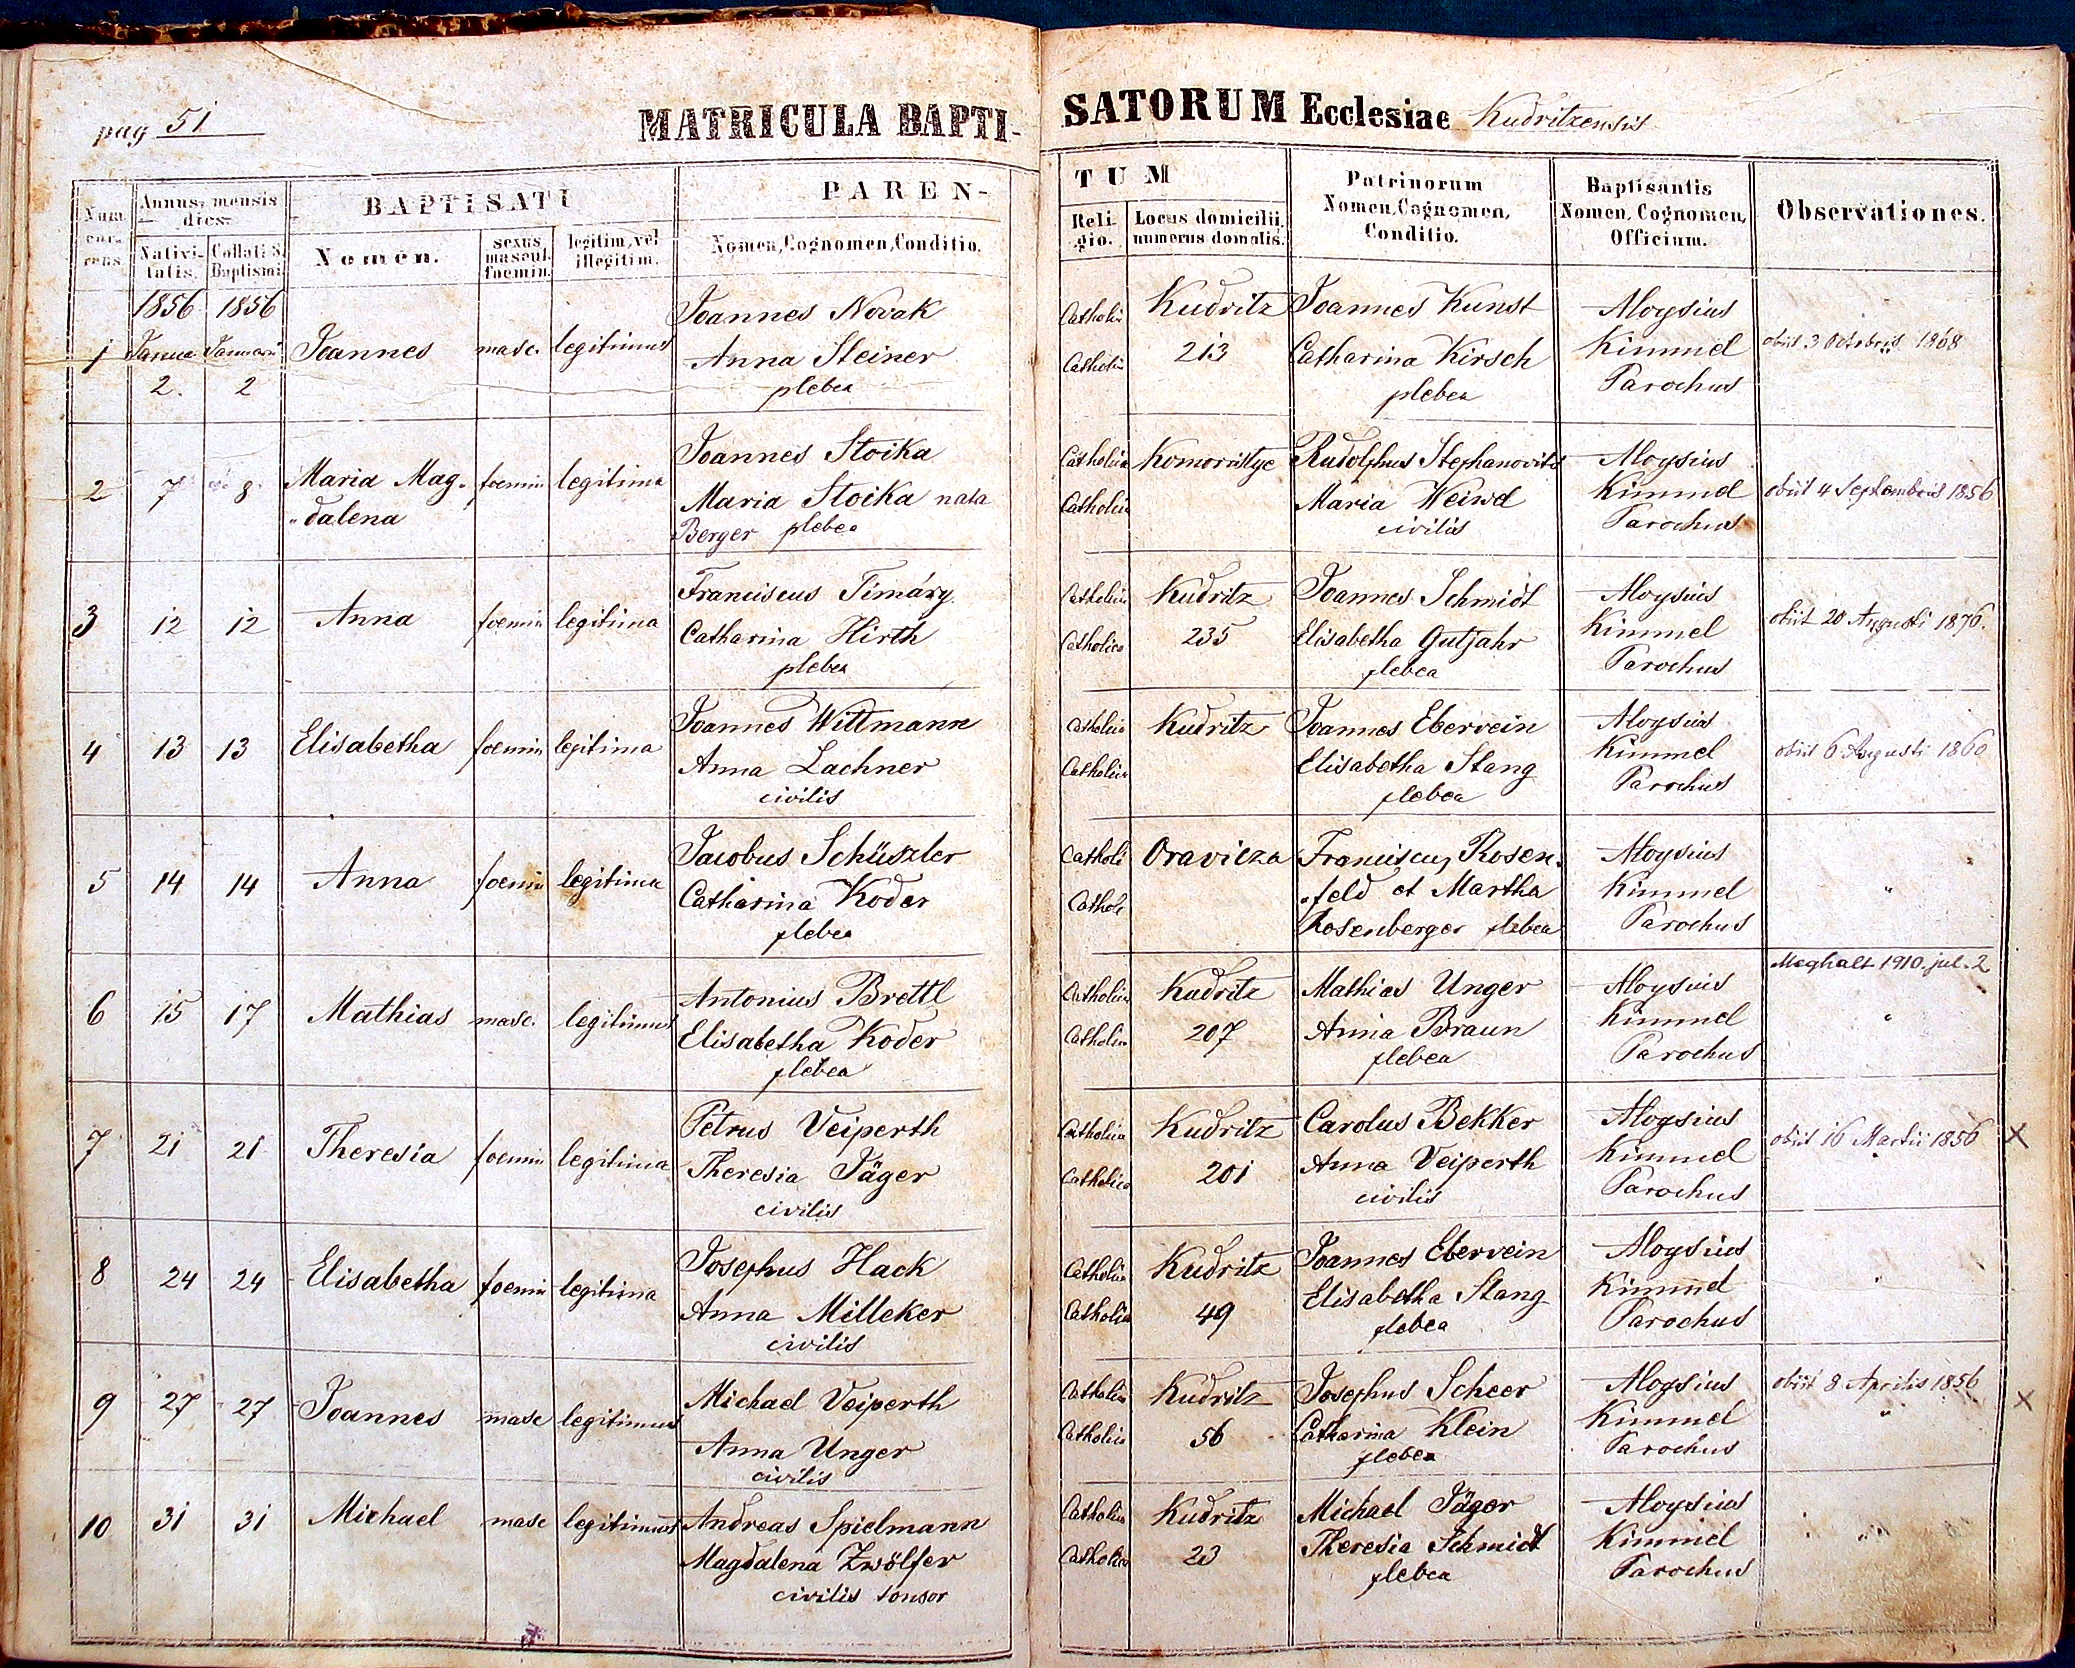 images/church_records/BIRTHS/1852-1870B/051